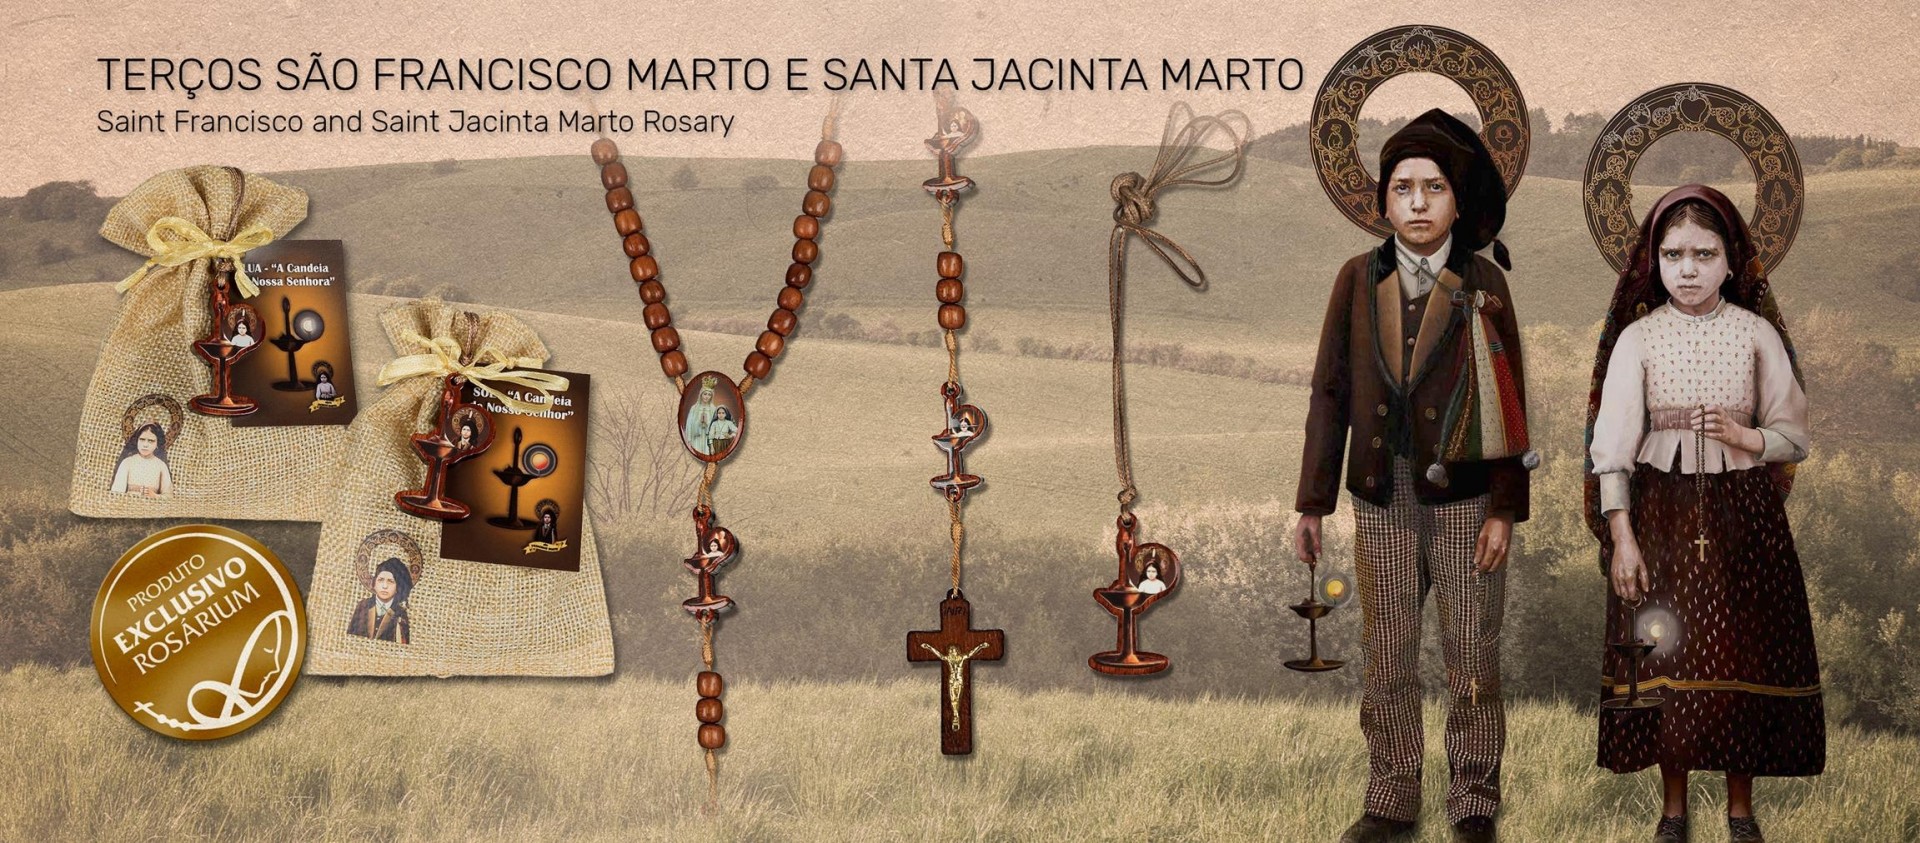 Saint Farncisco and Saint Jacinta Marto rosaries